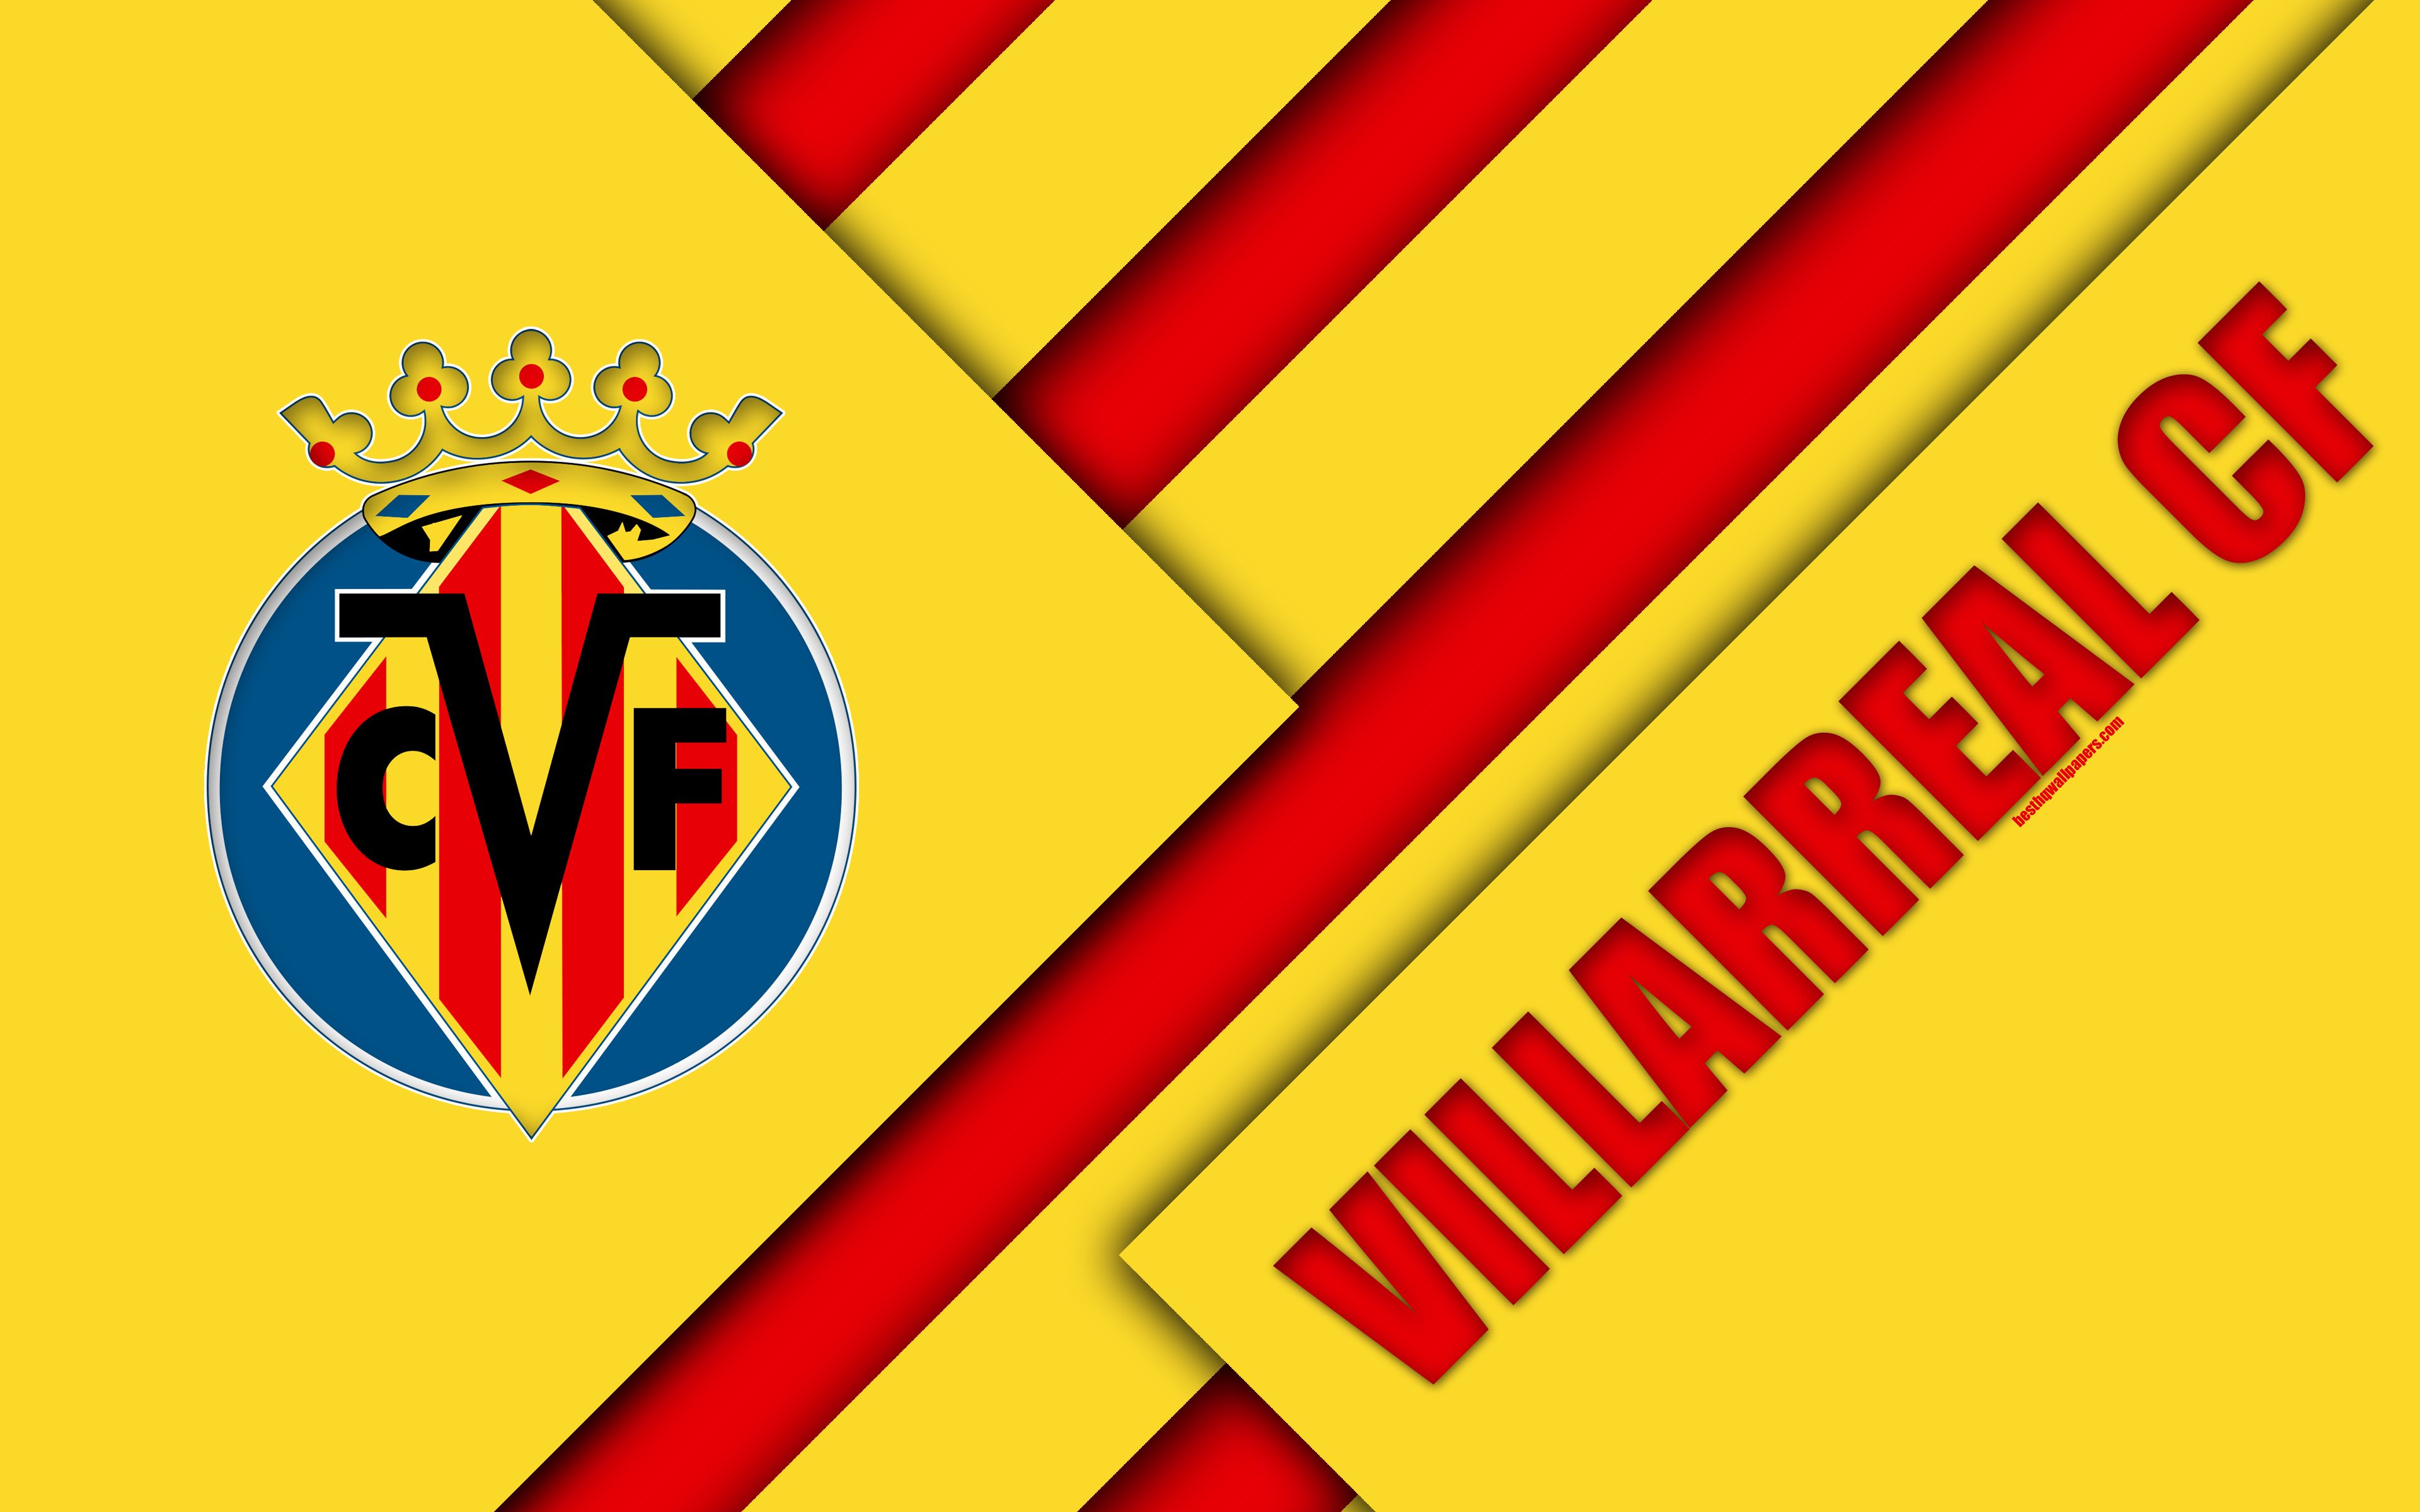 Villarreal Cf Wallpapers